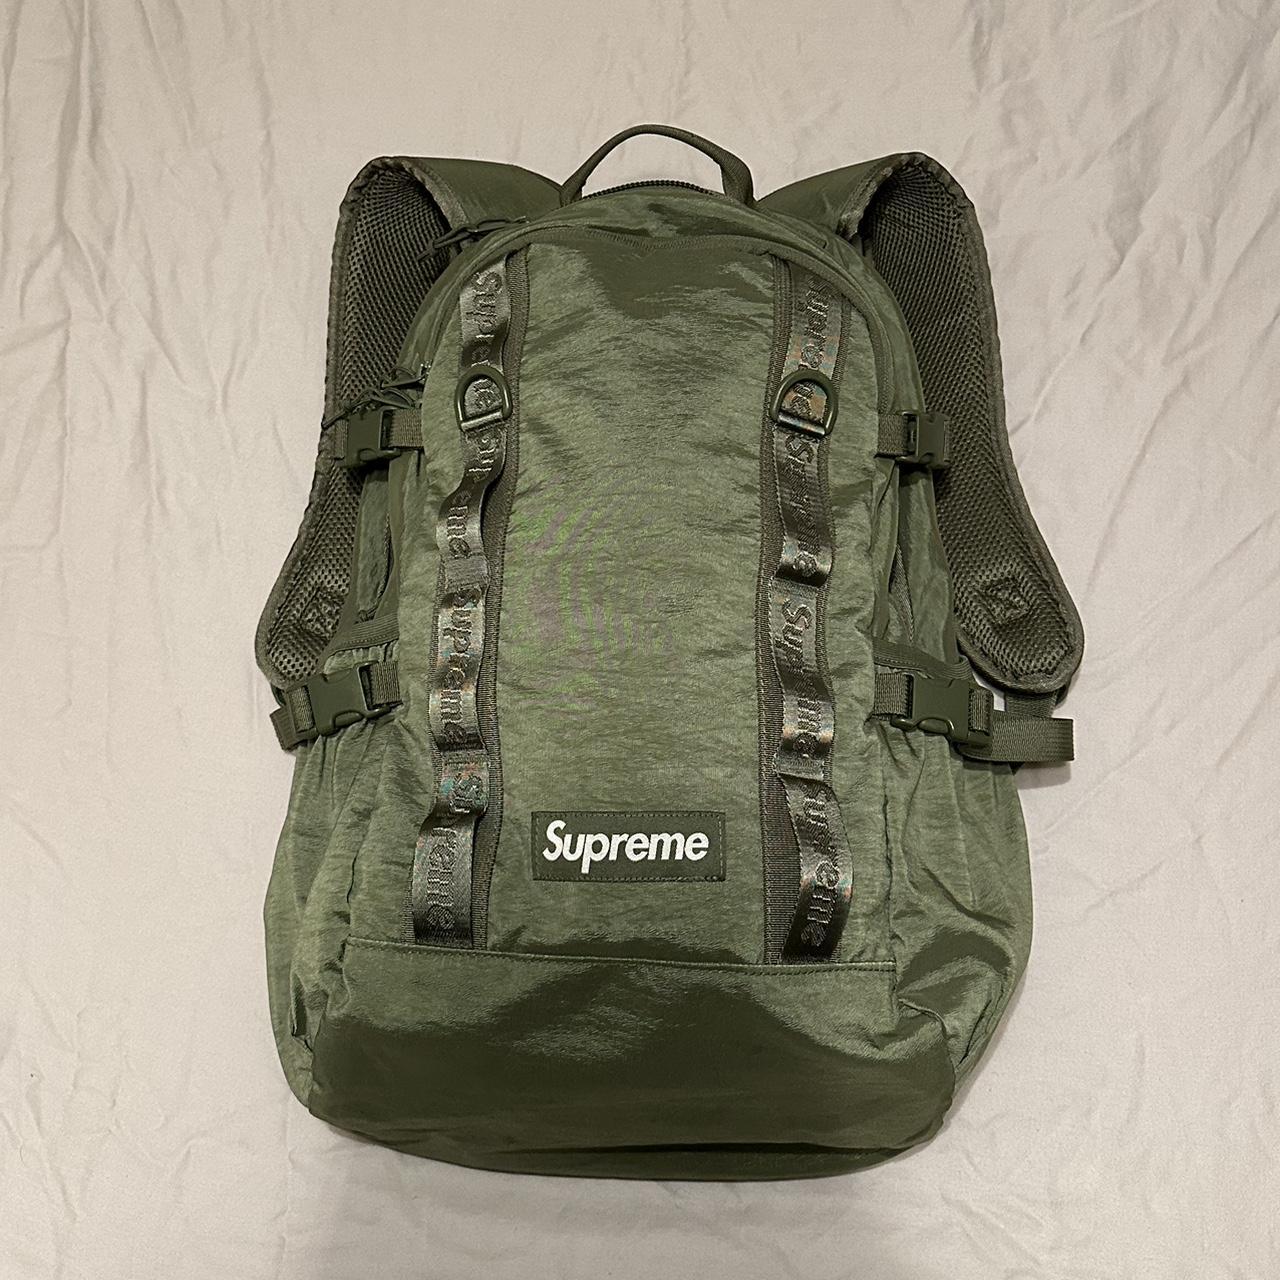 Supreme Olive Backpack FW20 Retail was $148 - Depop